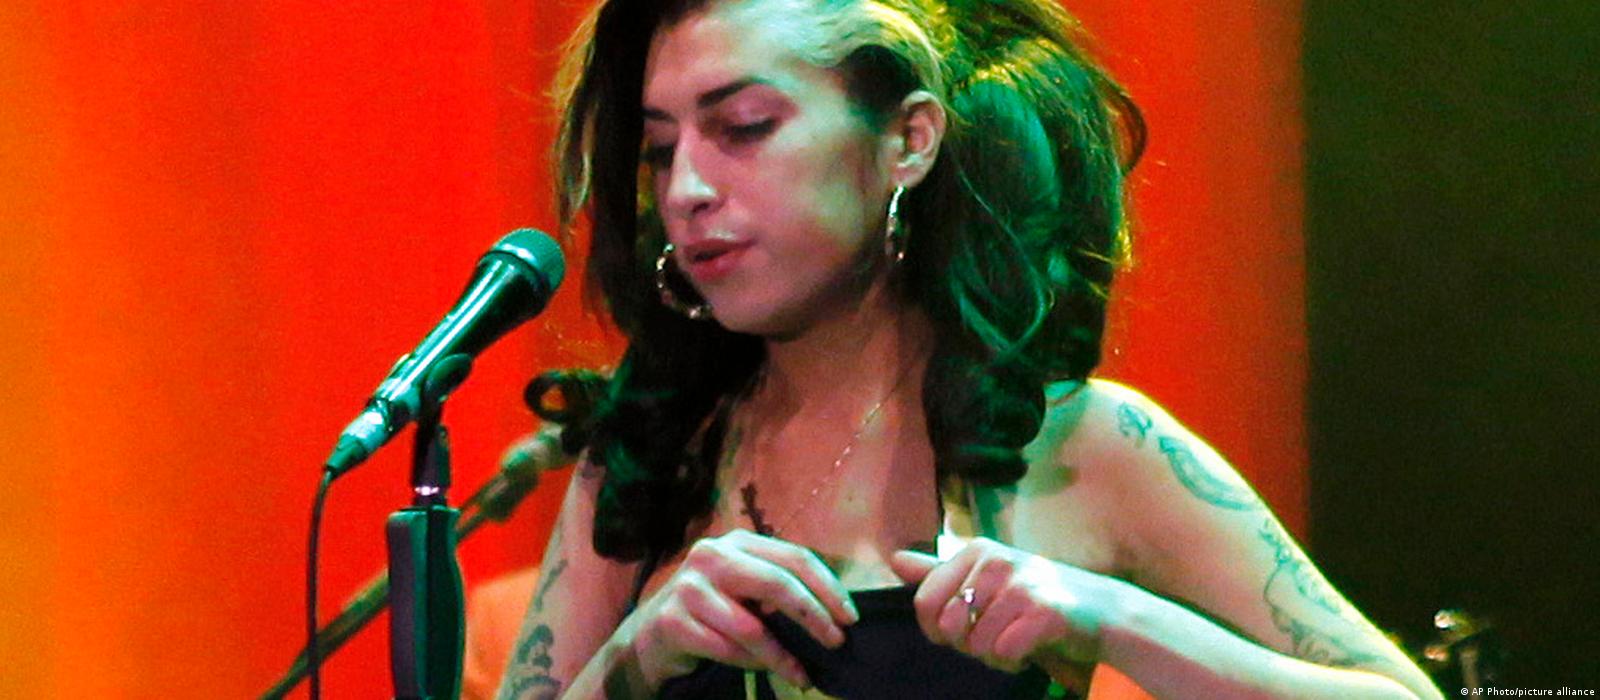 Amy Winehouse Pop Art Poster - Infamous Inspiration